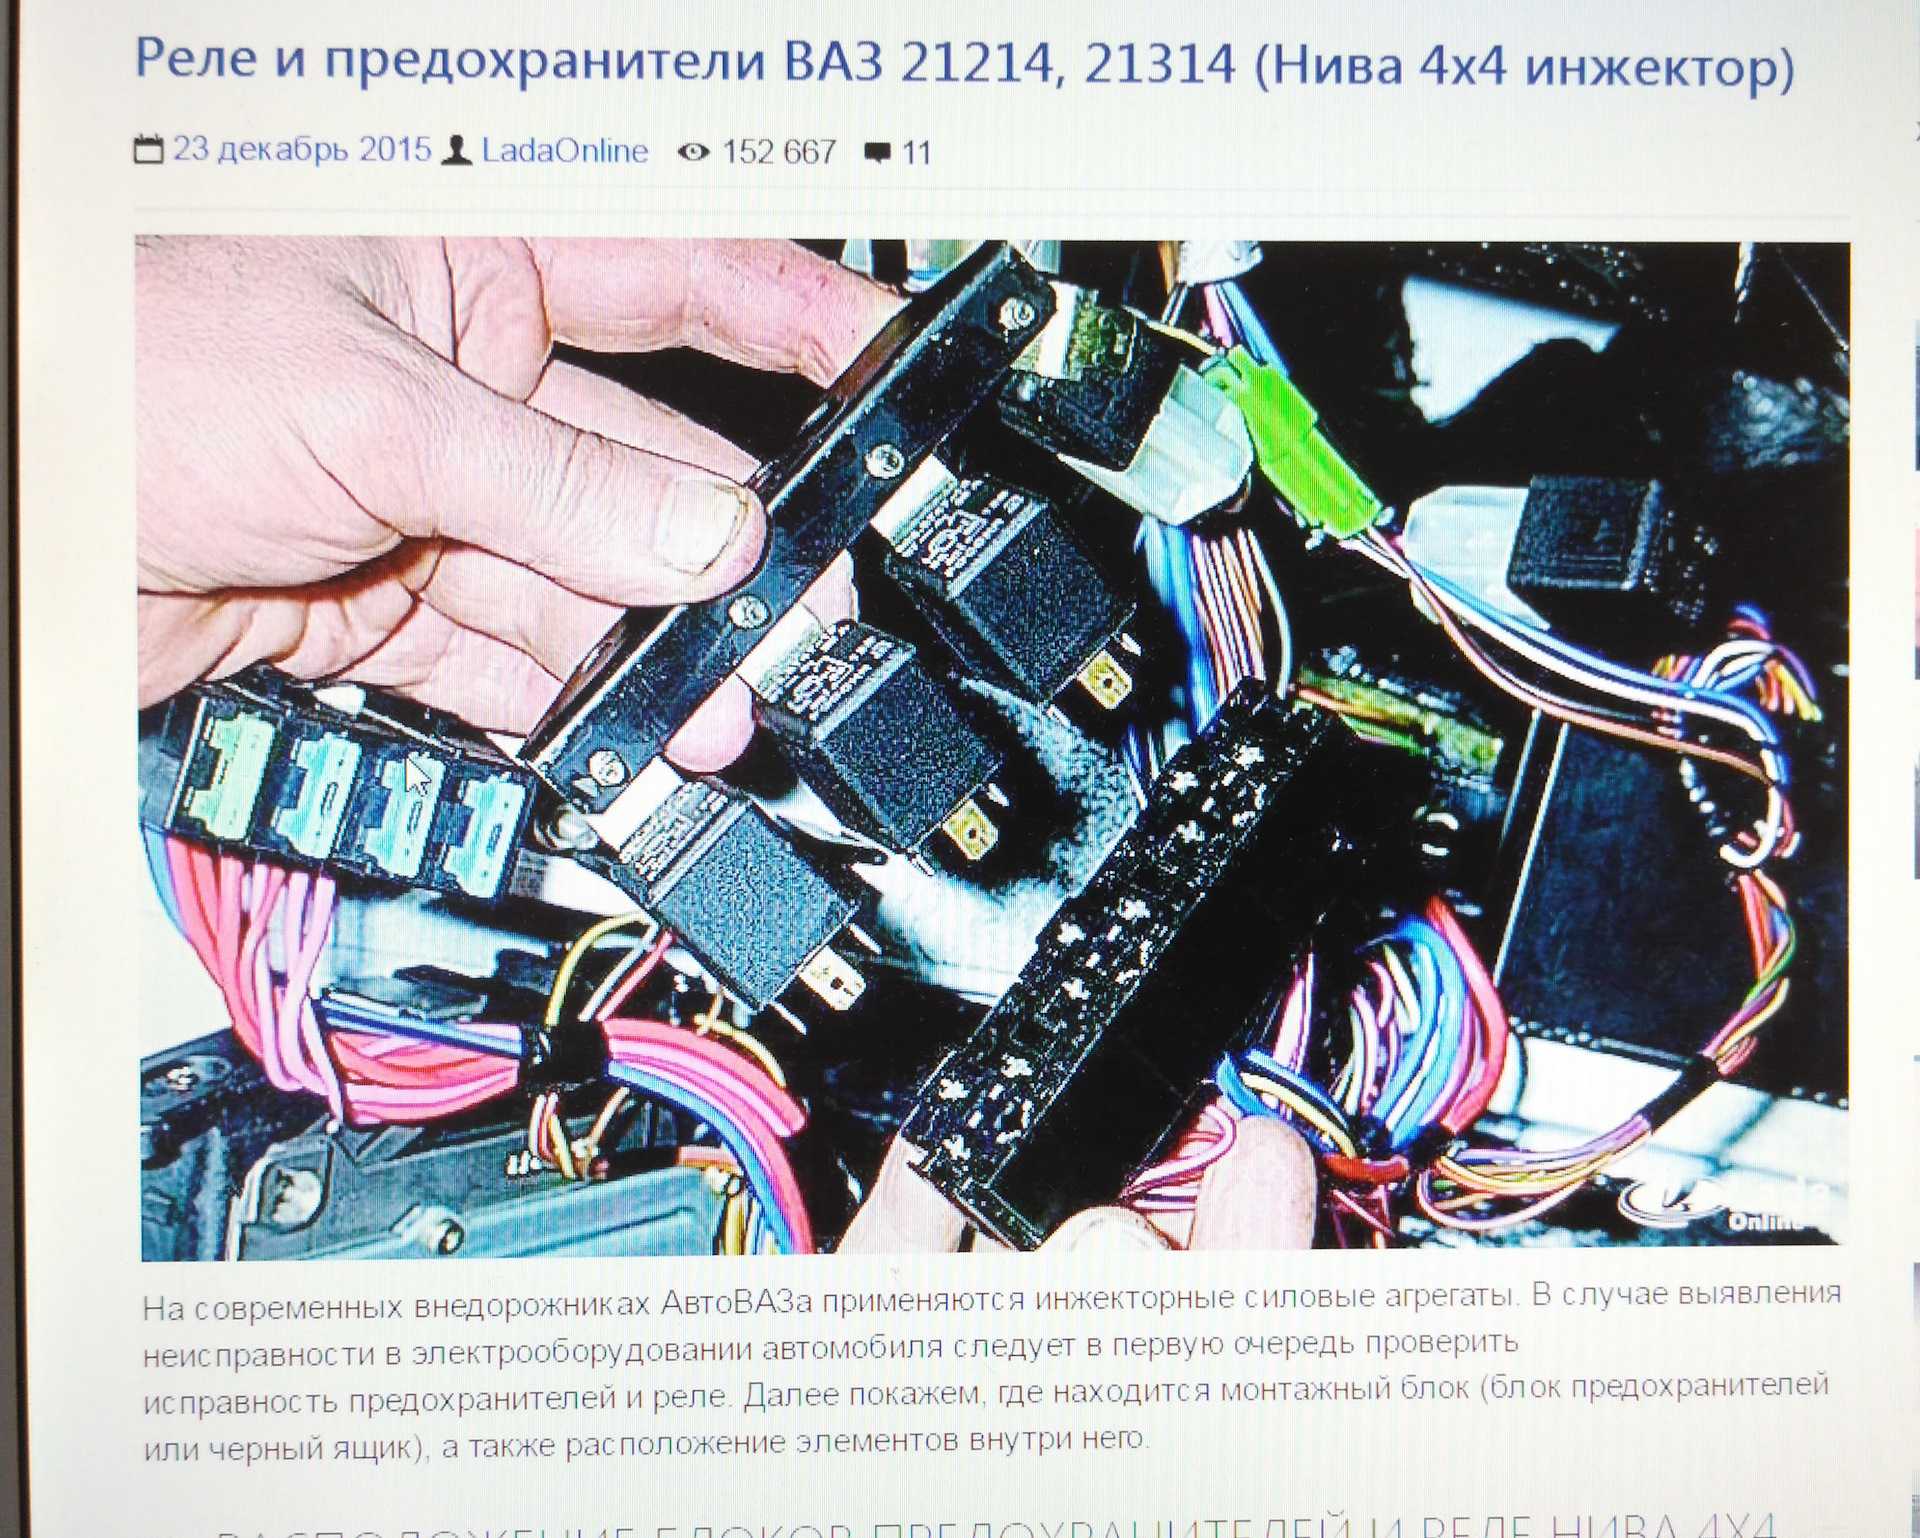 Реле и предохранители lada 4x4 (ваз 21214, 21314) » лада.онлайн - все самое интересное и полезное об автомобилях lada « newniva.ru